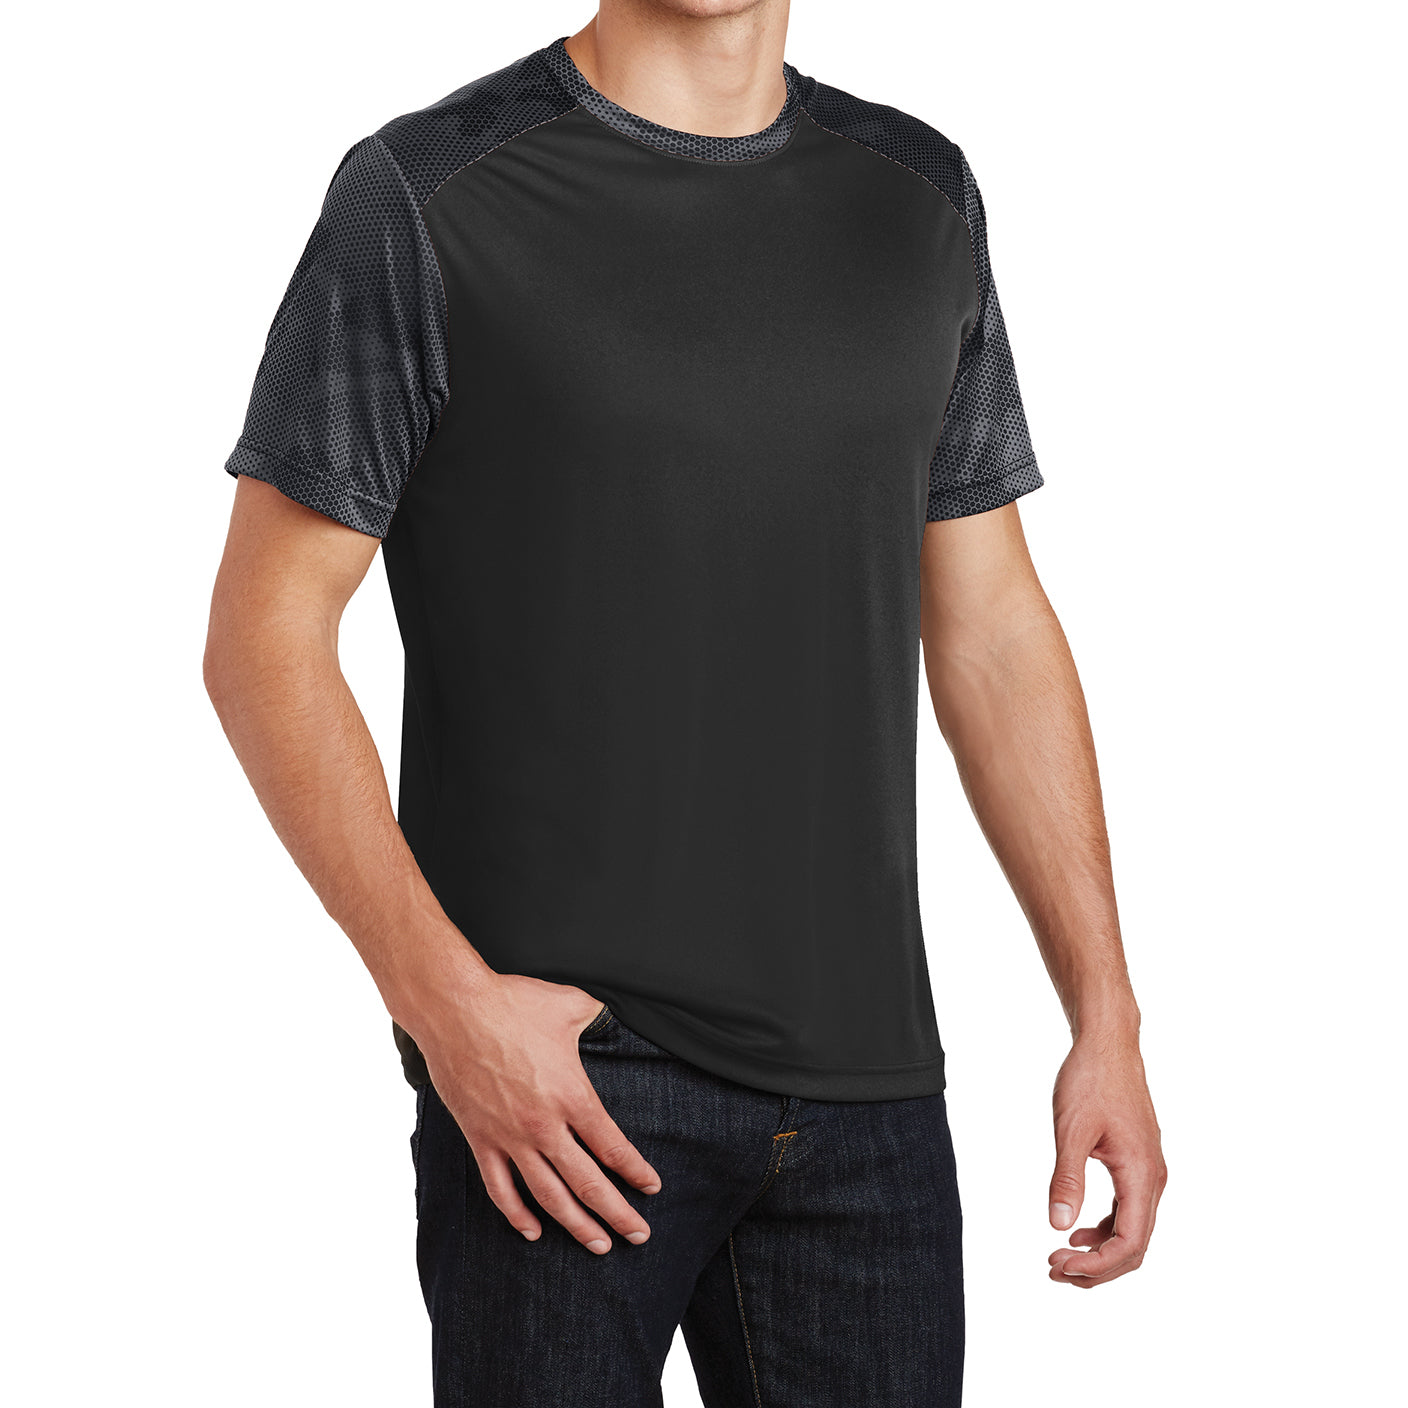 Men's CamoHex Colorblock Tee Shirt Black/ Iron Grey Side